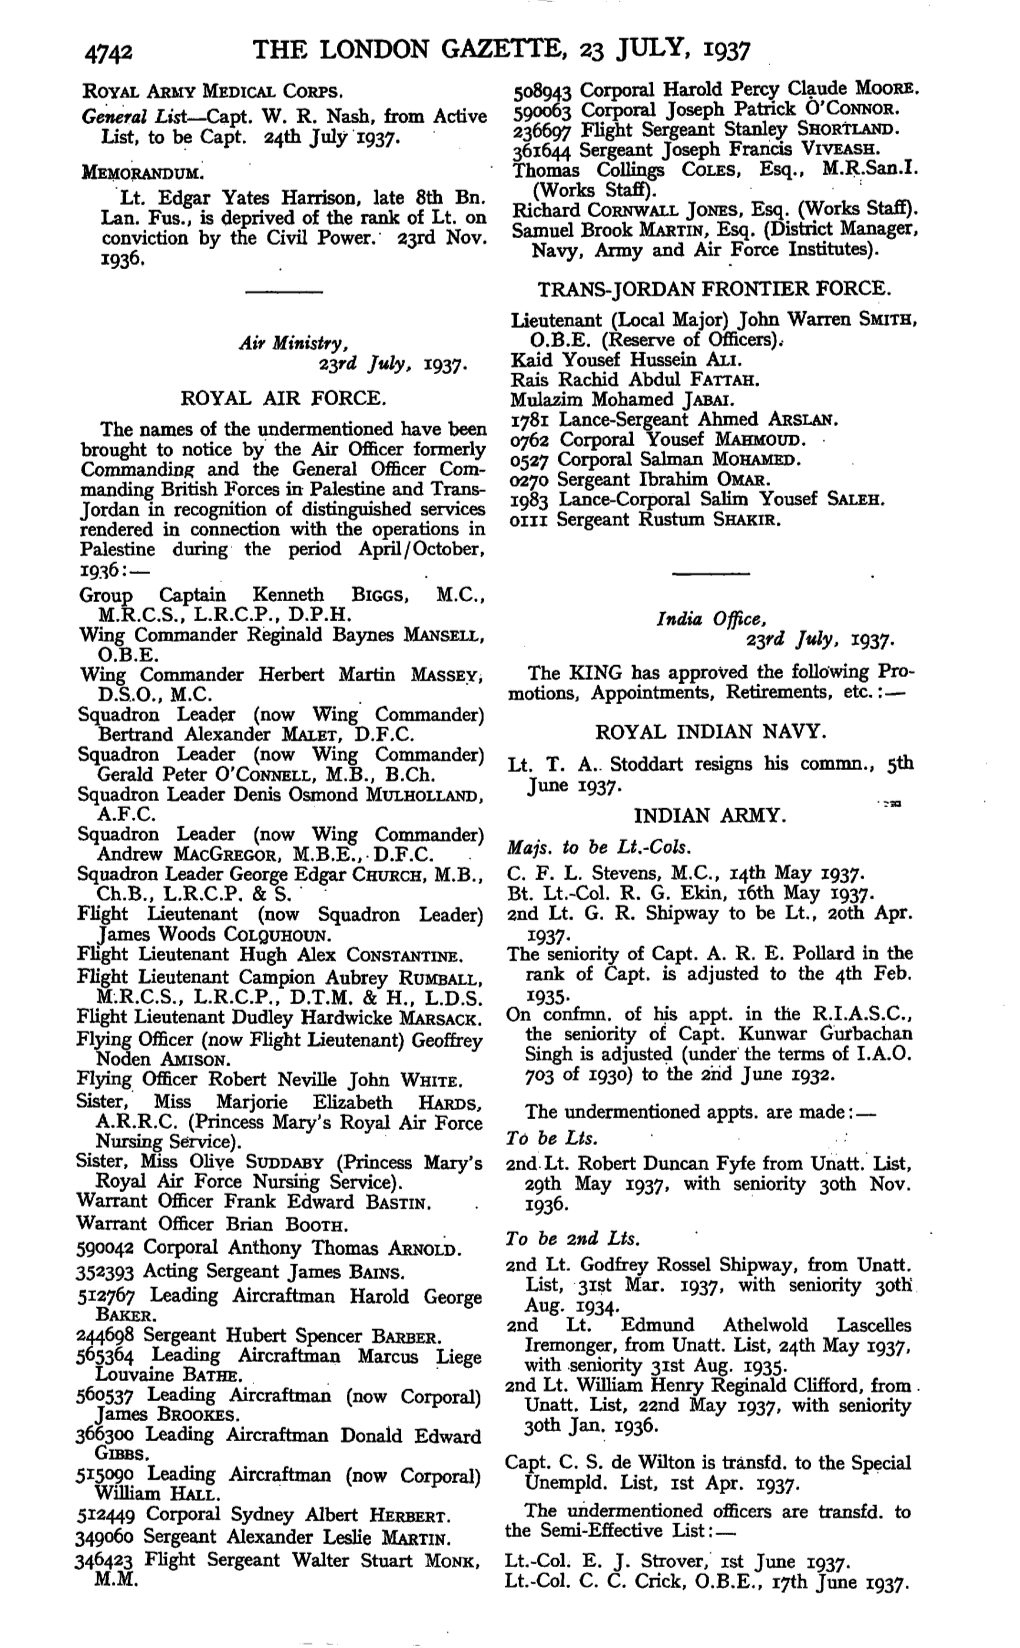 4742 the London Gazette, 23 July, 1937 Royal Army Medical Corps